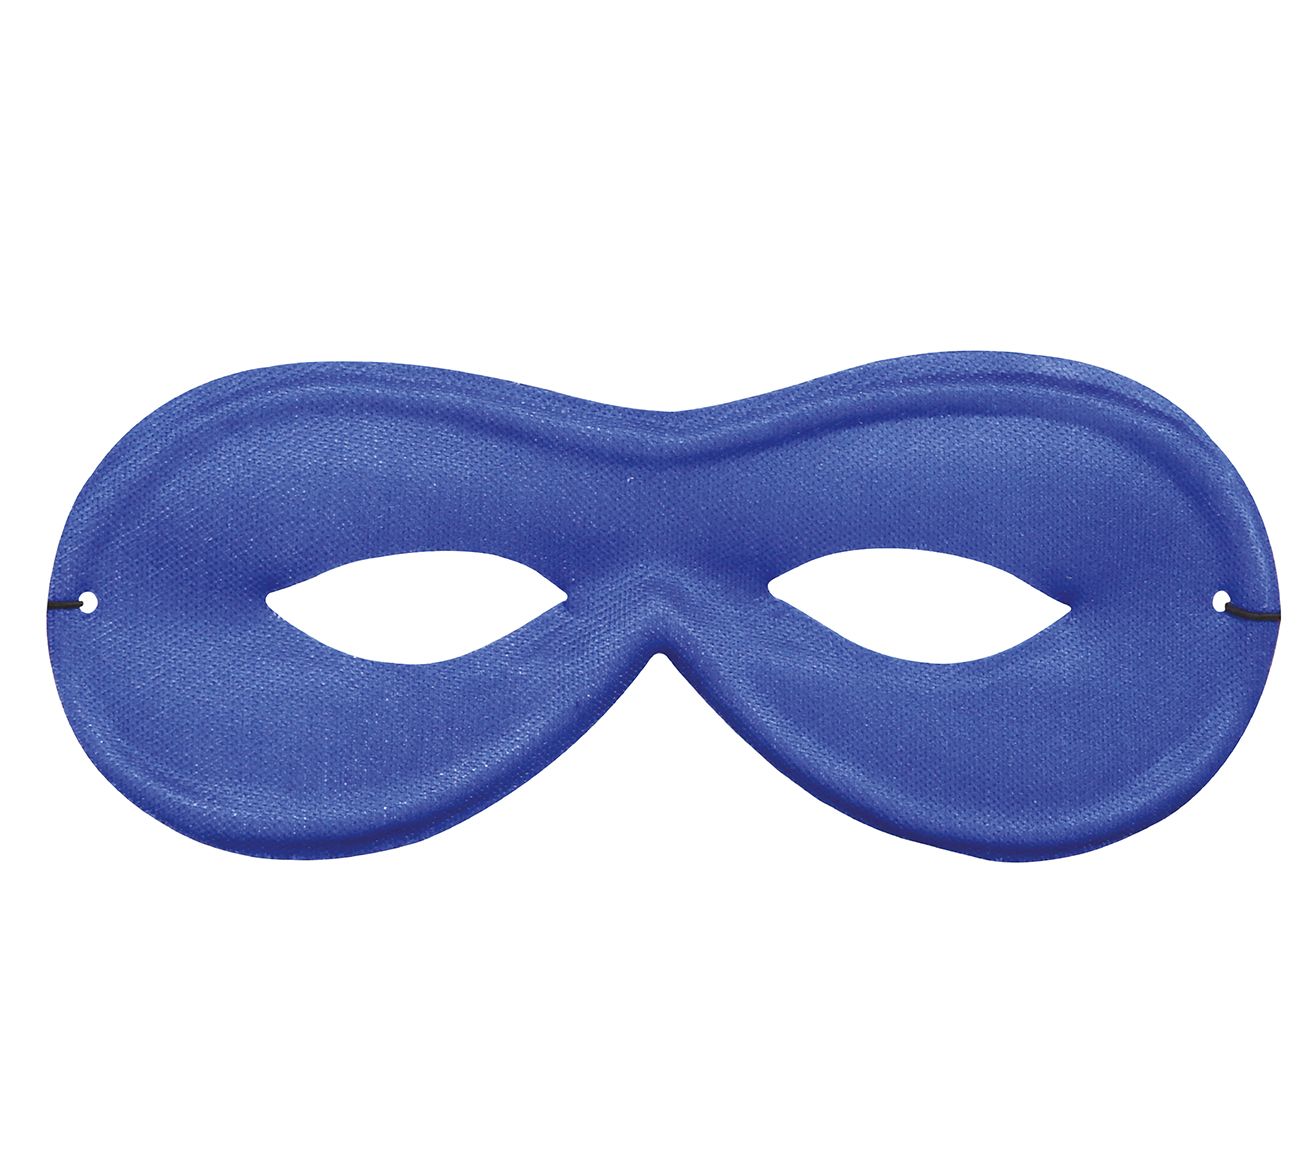 Basic oogmasker blauw